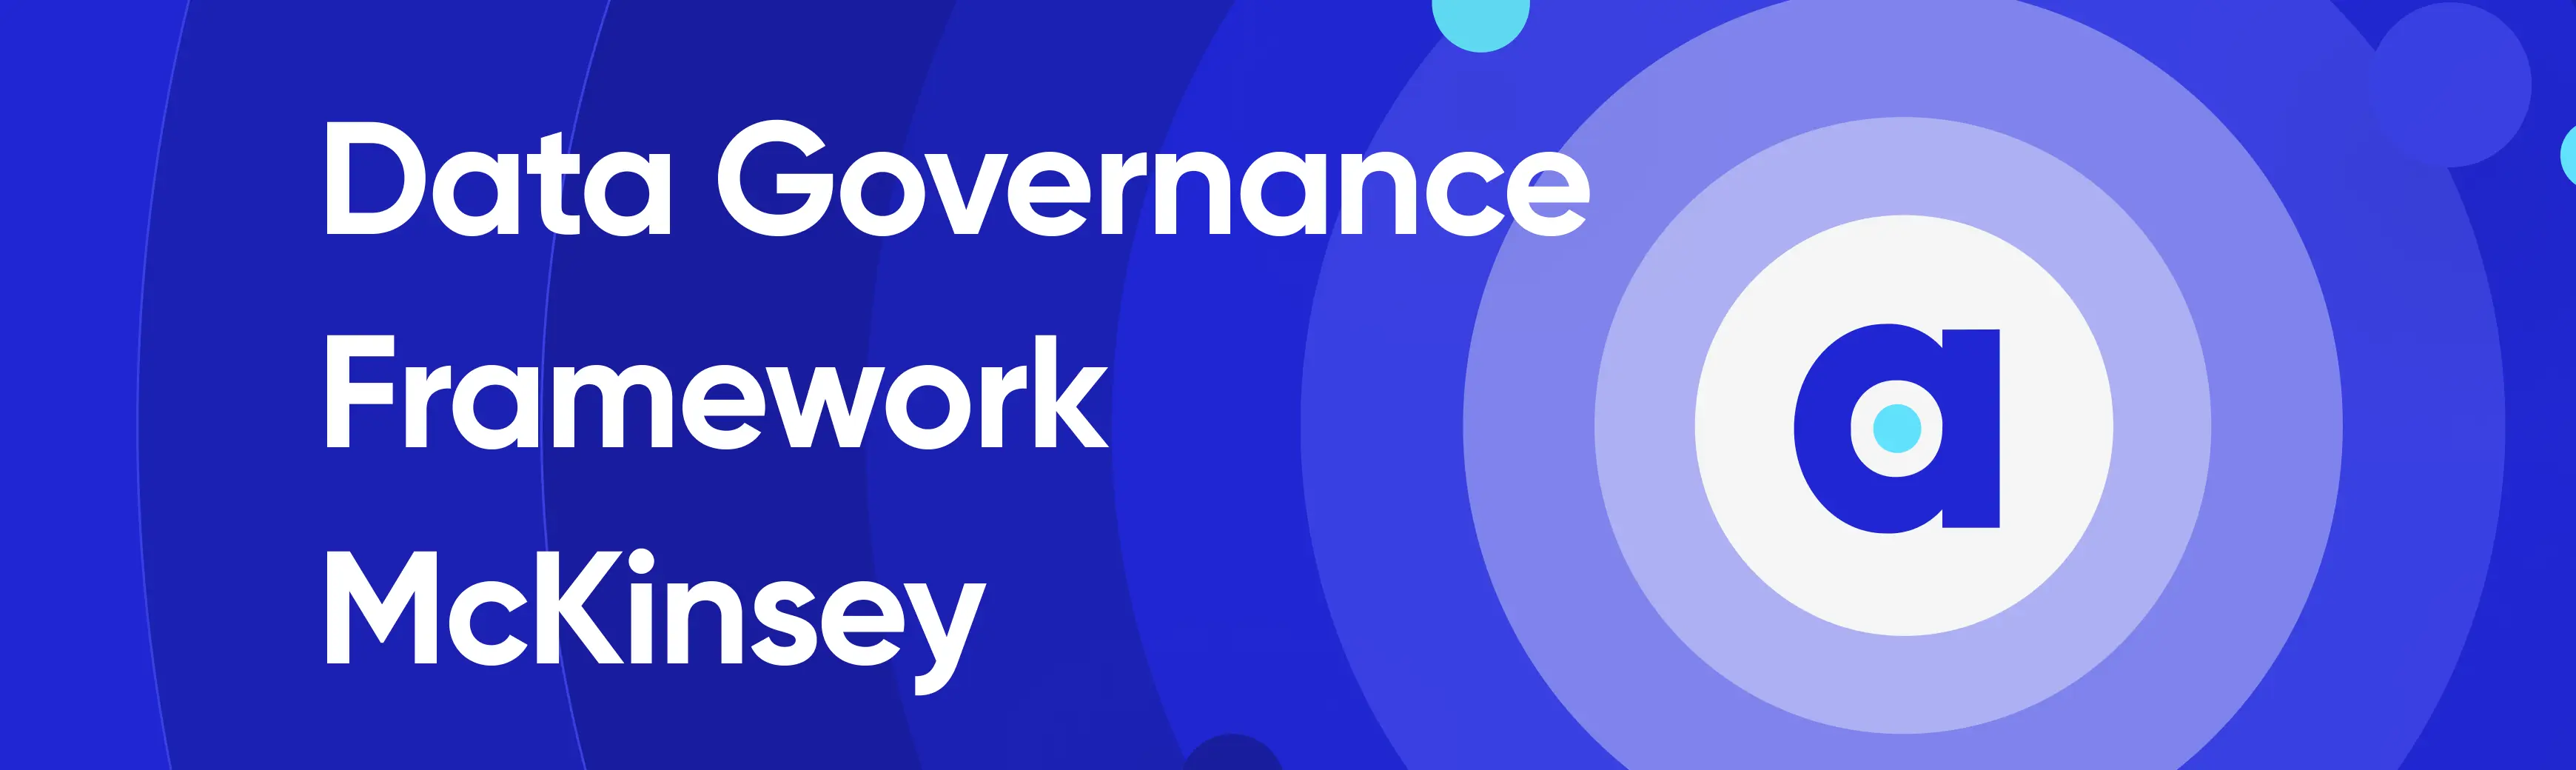 A sound data governance model, according to McKinsey data governance framework